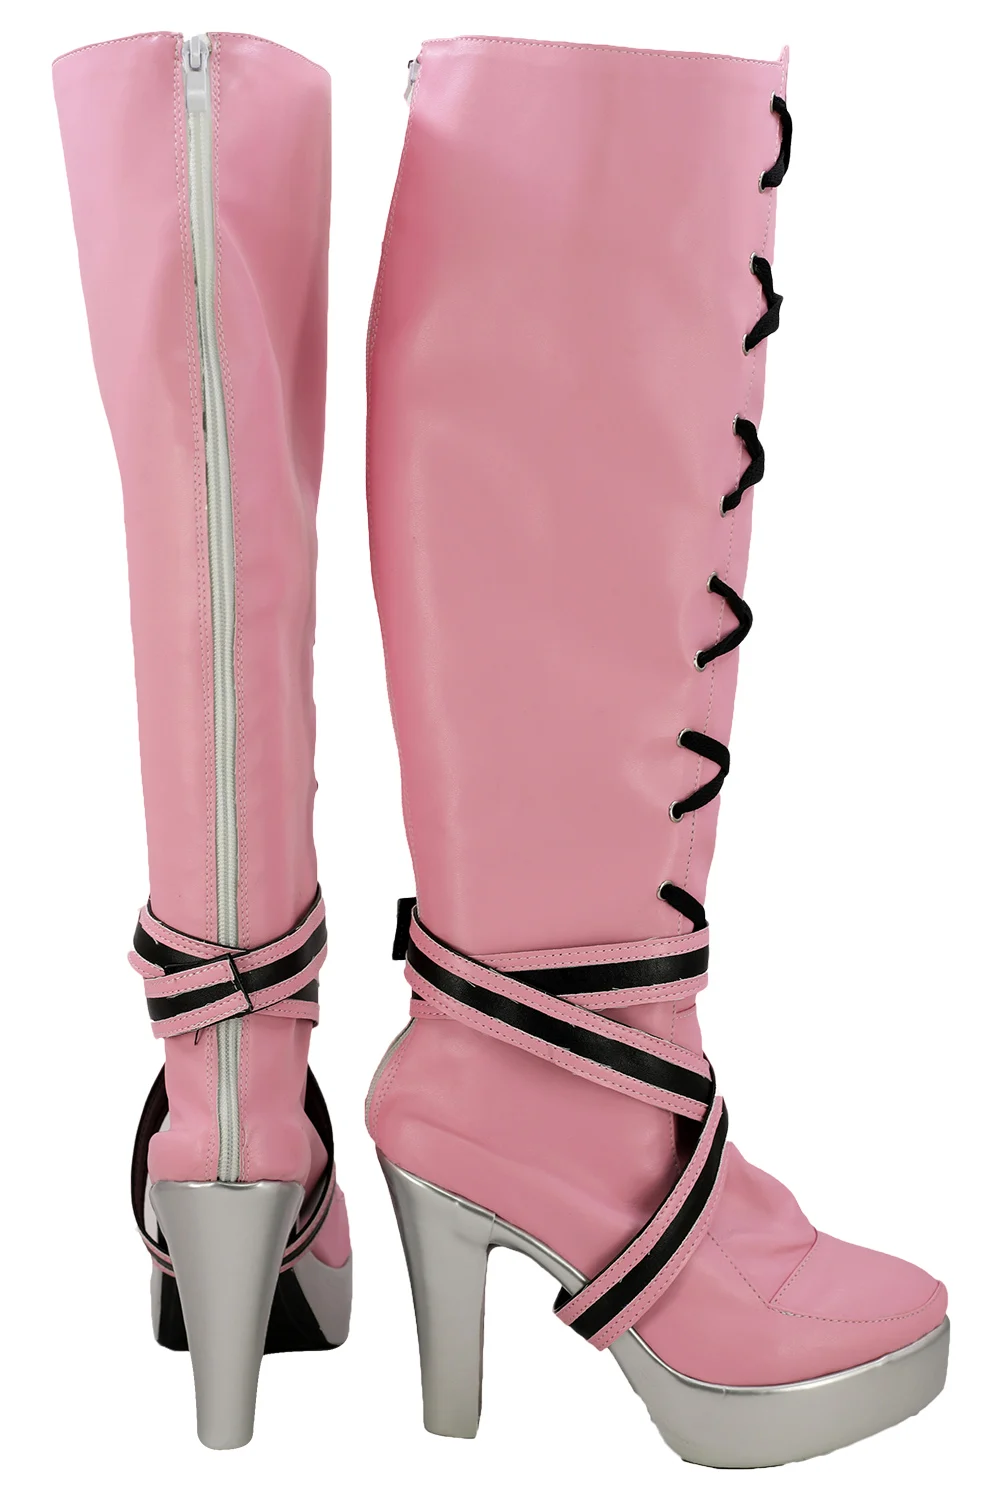 Draculaura cosplay boots